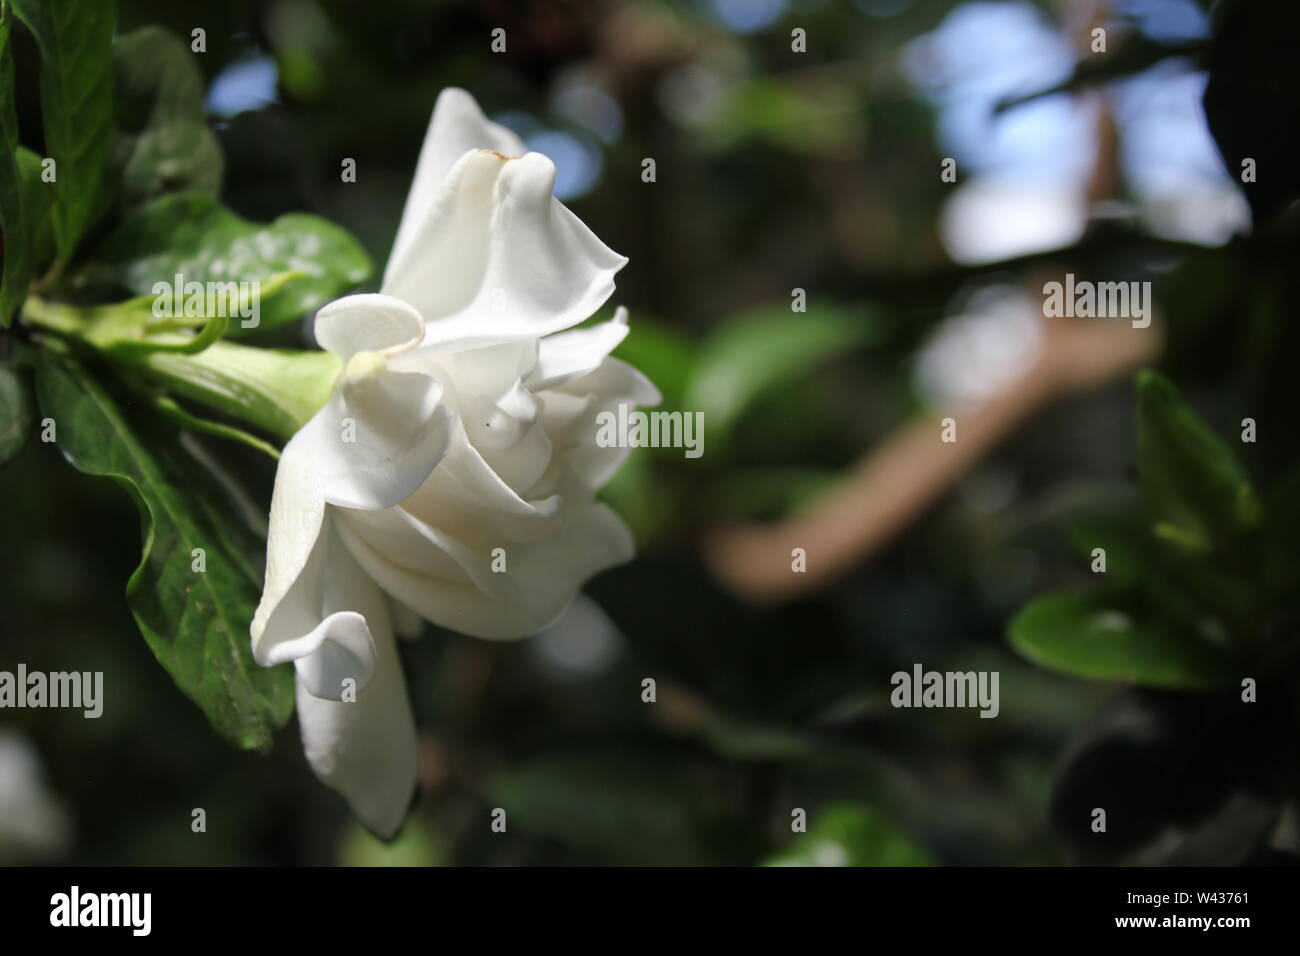 White Gardenia Blossom, Gardenia jasminoides, Augusta, Kap Jasmin, danh-danh, Kap jessamine in voller Blüte. Stockfoto